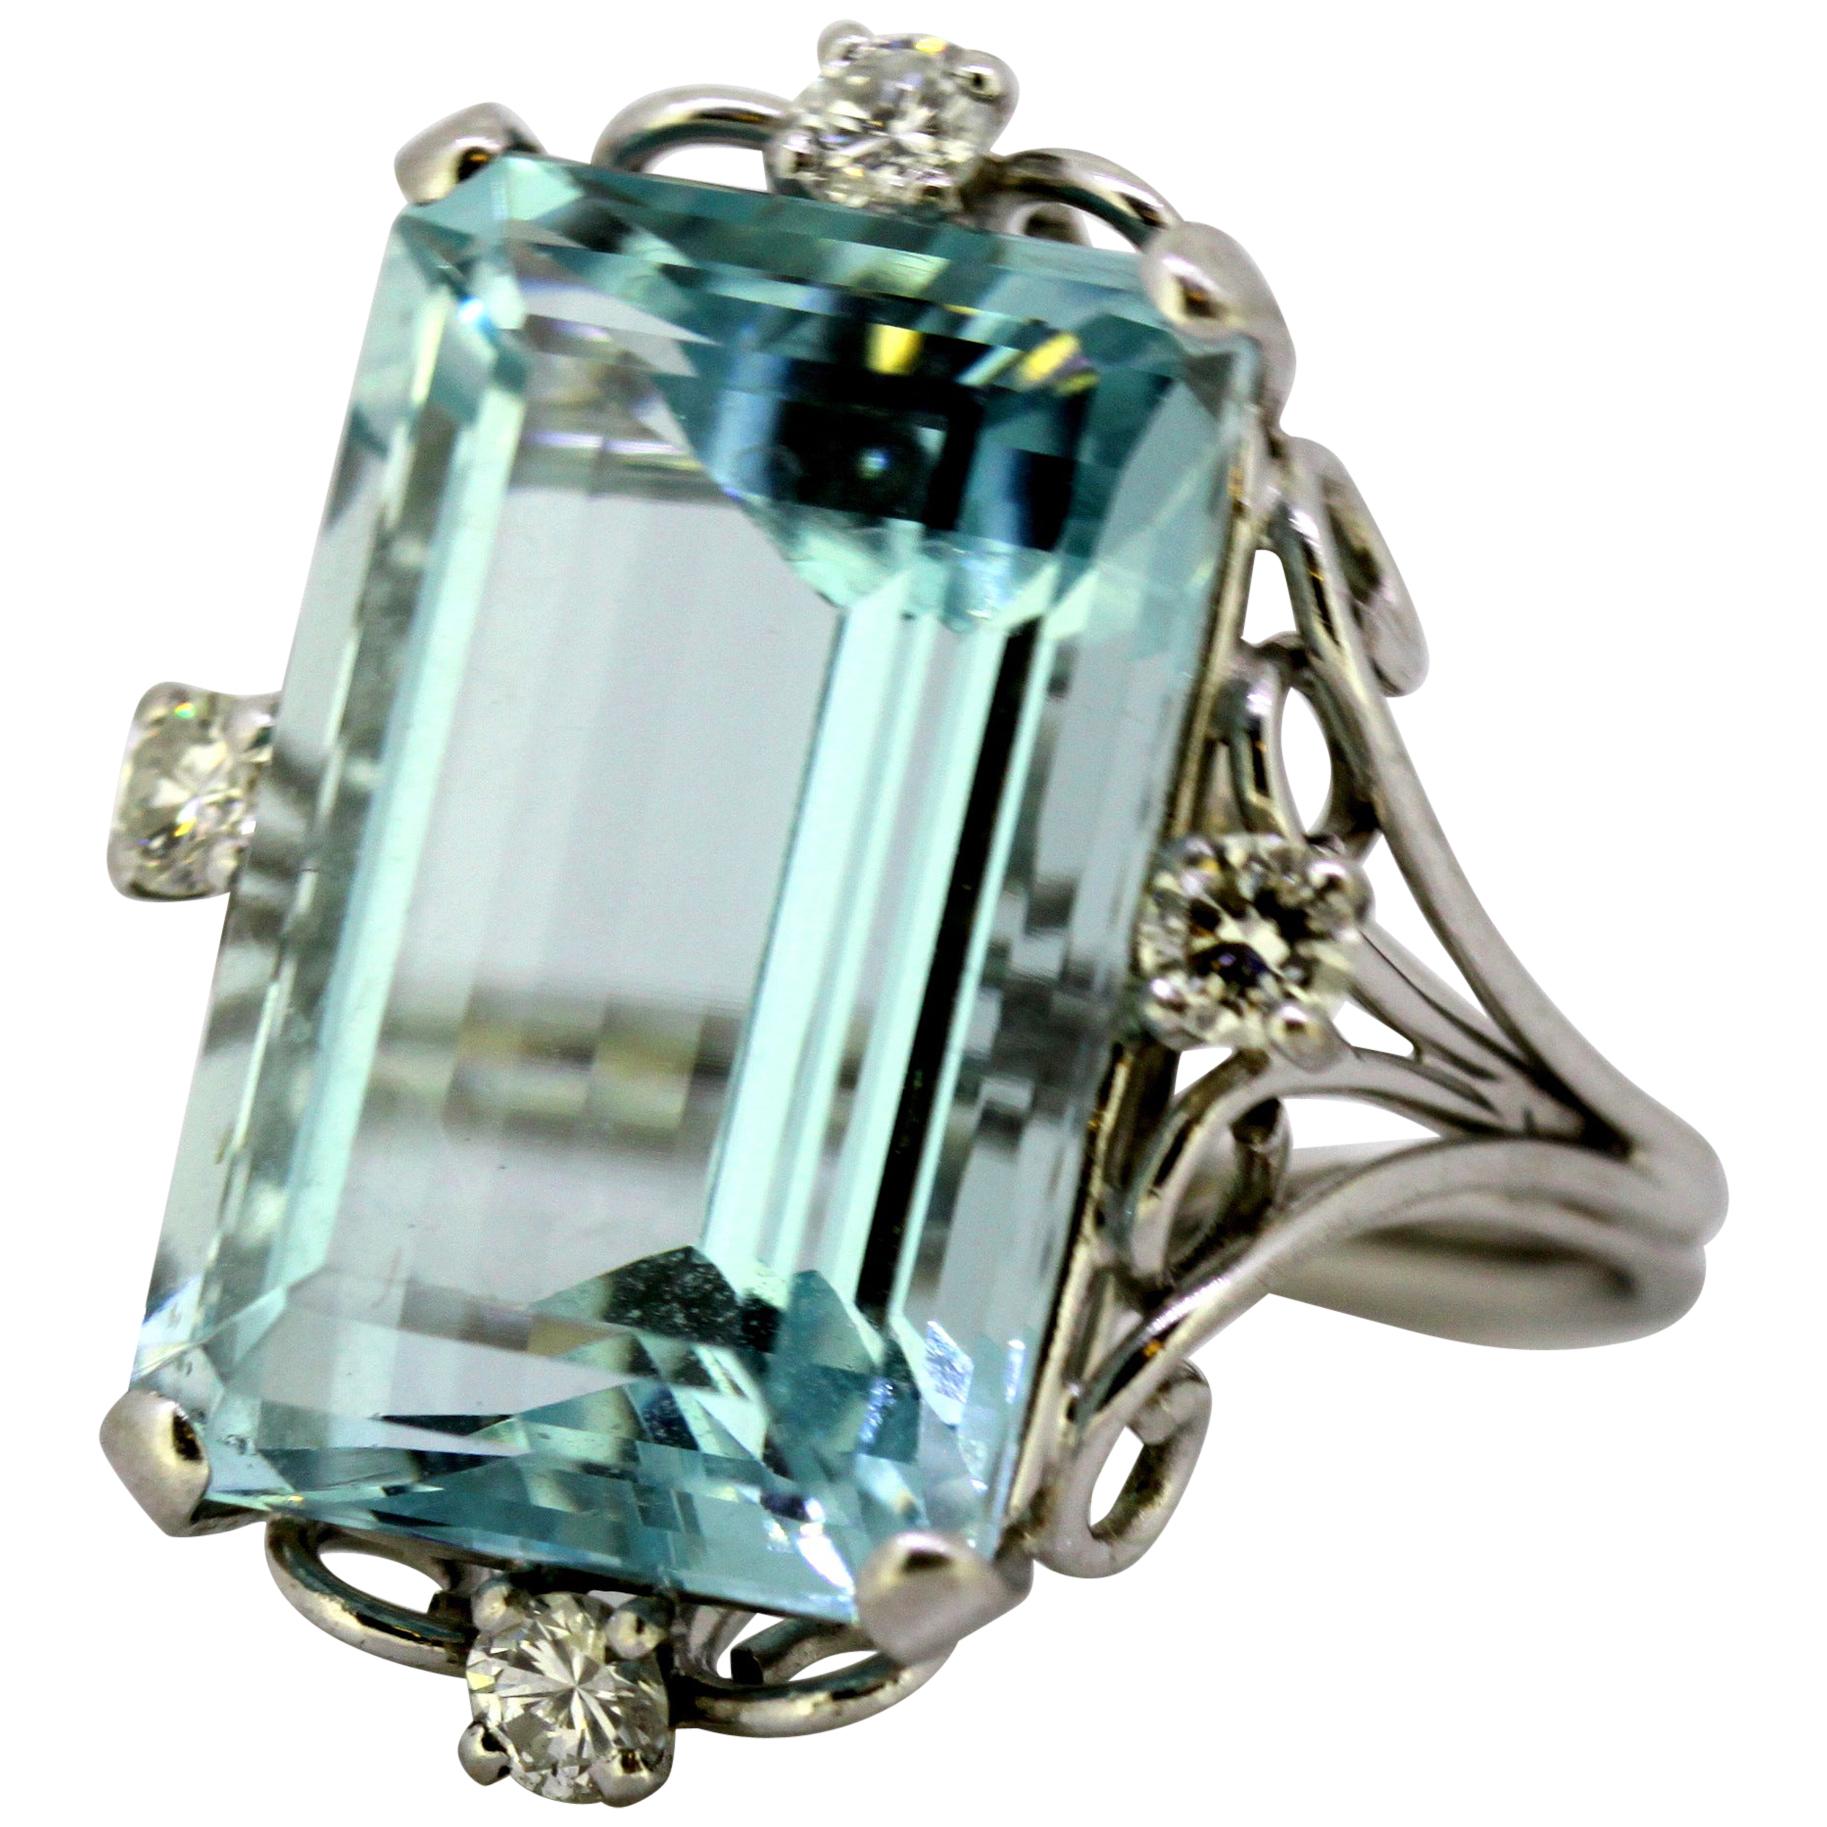 Vintage 18 Karat White Gold Ladies Ring with Natural Aquamarine and Diamonds